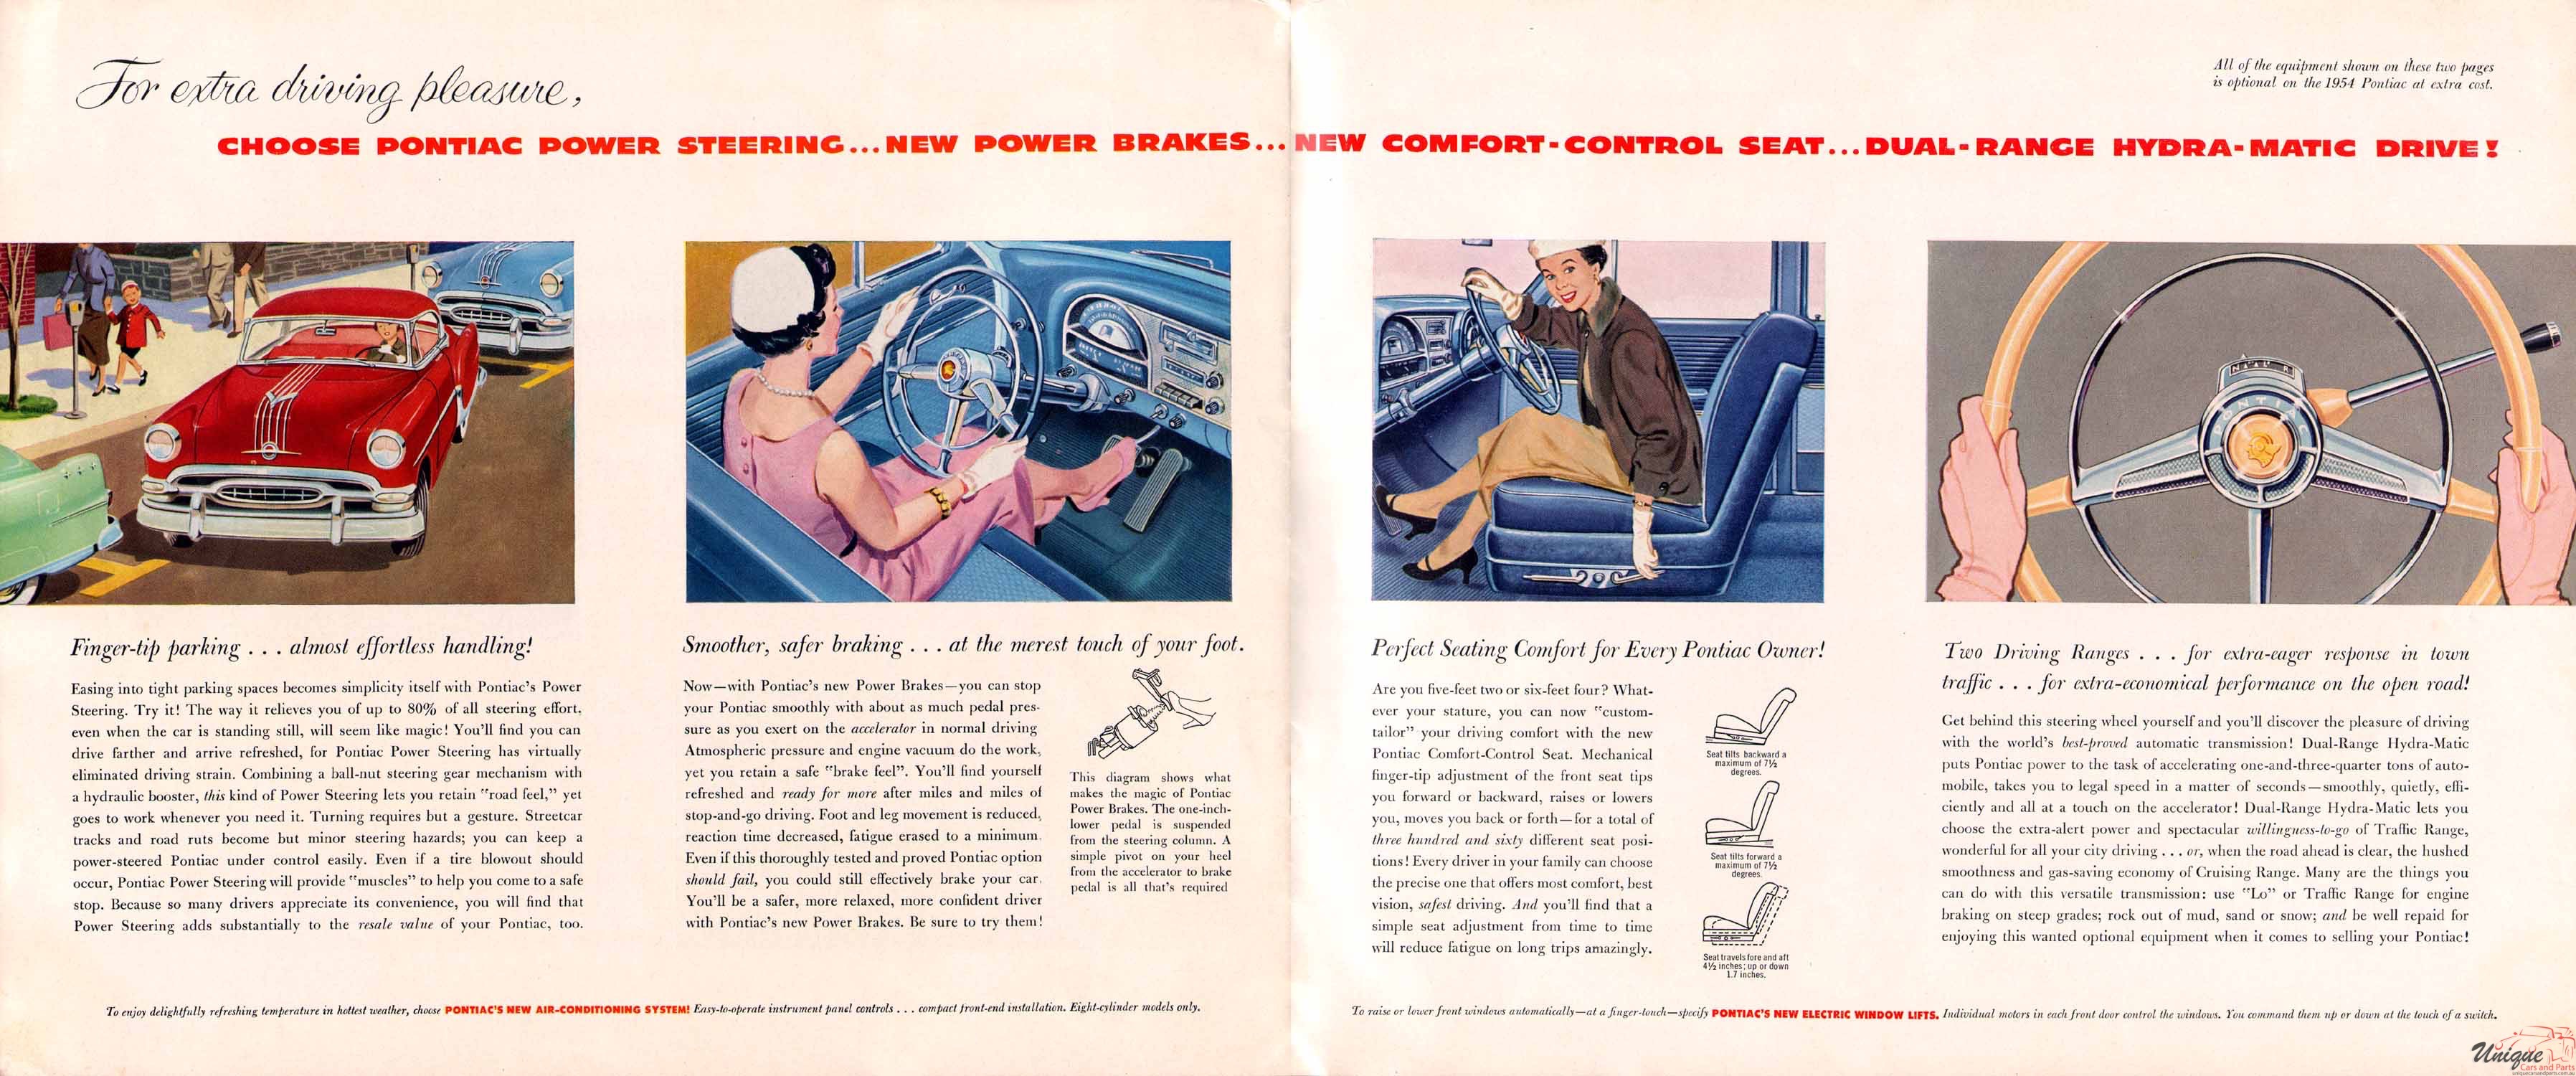 1954 Pontiac Prestige Brochure Page 4